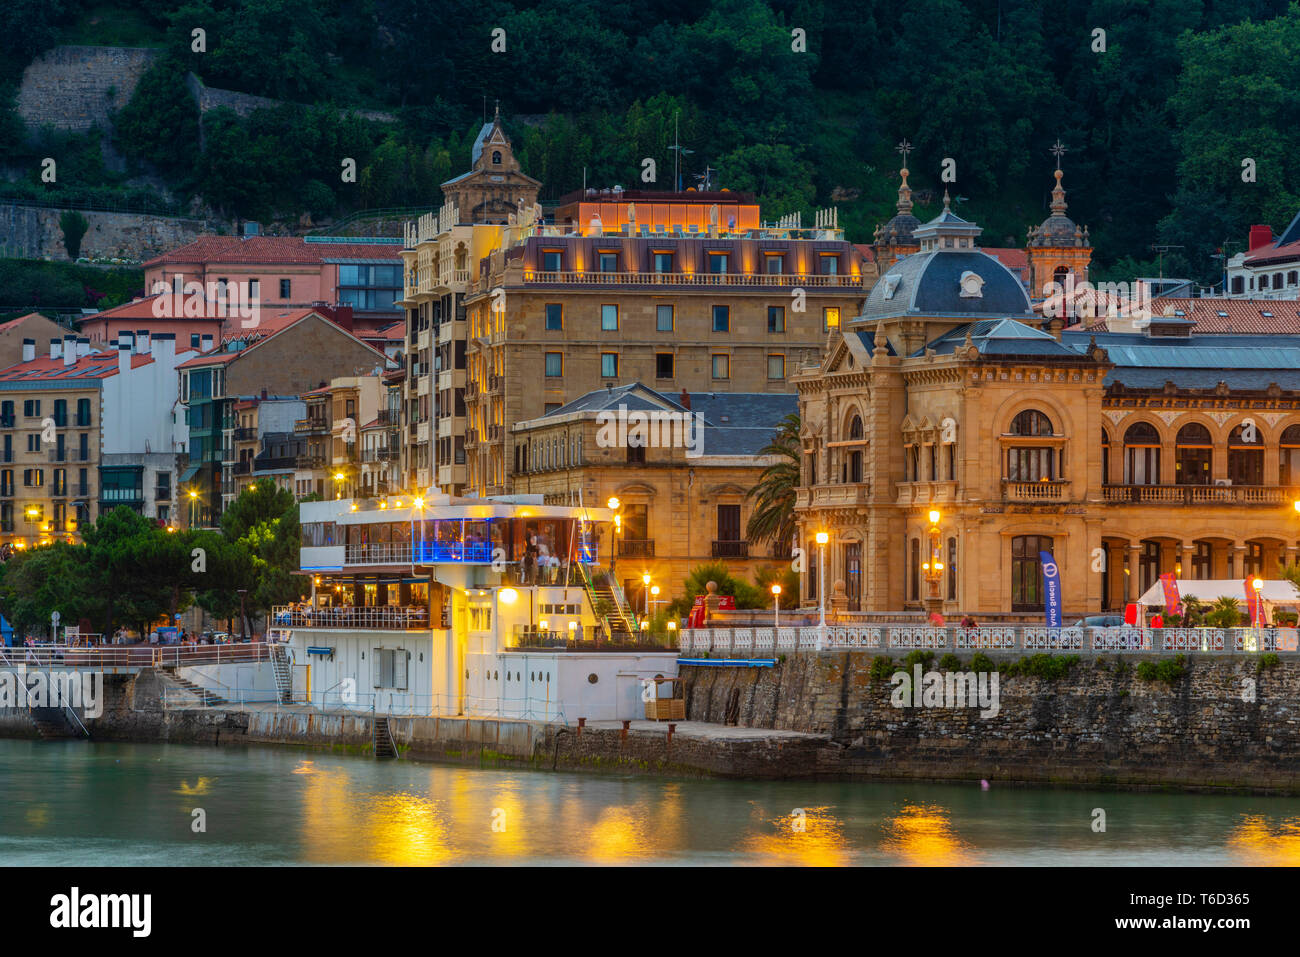 Spagna, Paesi Baschi, San Sebastian (Donostia), il municipio e la vecchia città illuminata di notte Foto Stock